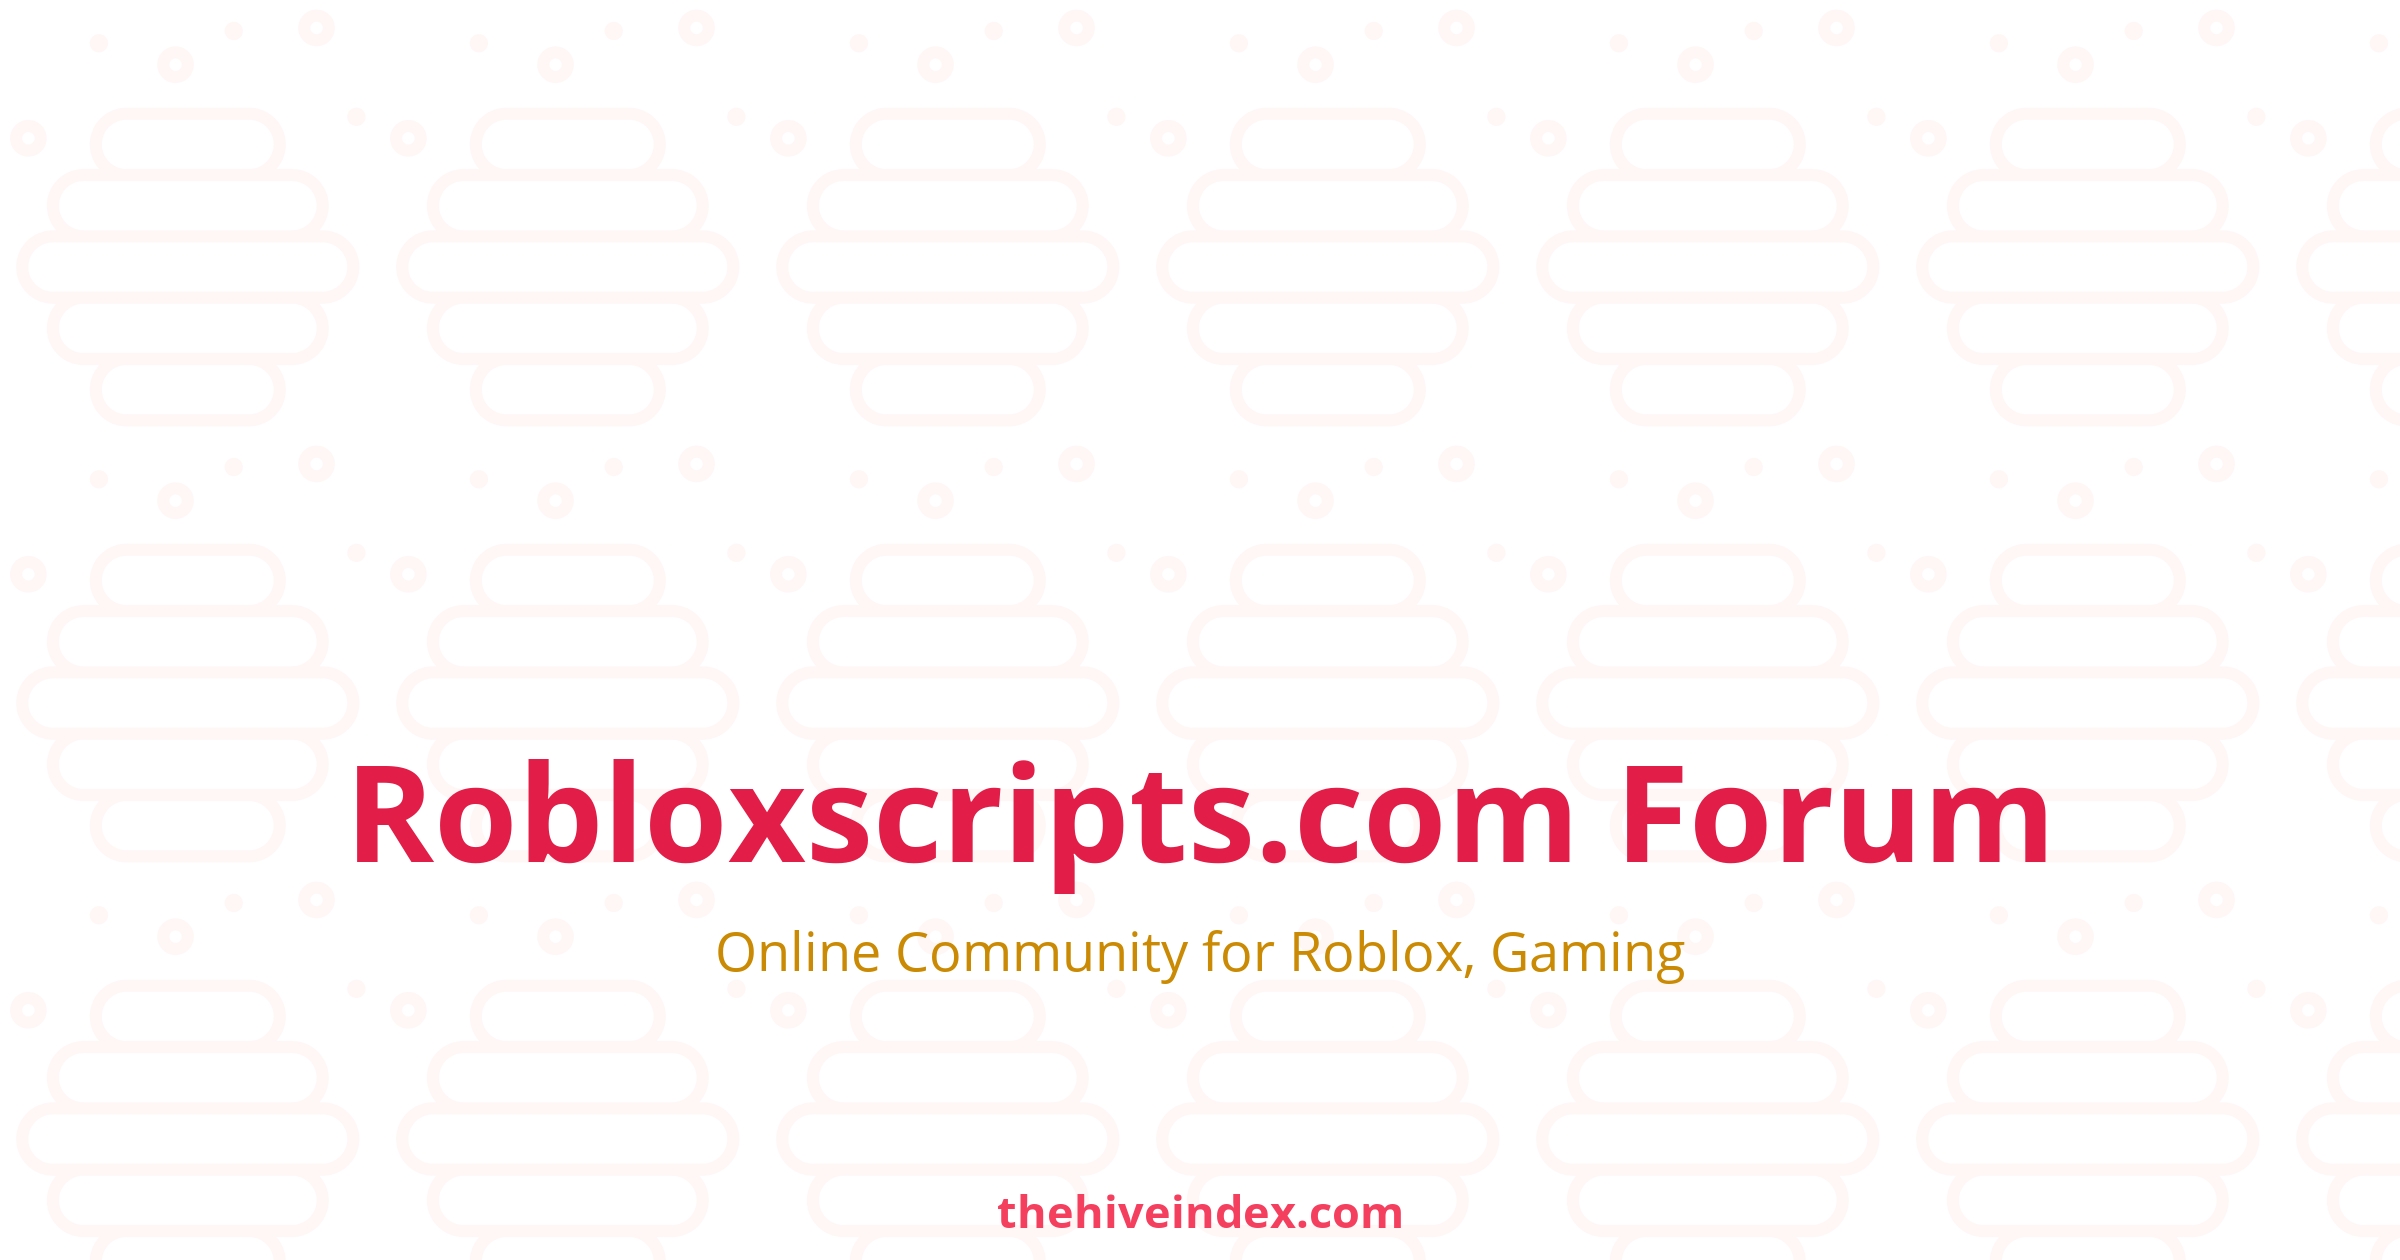 robloxscript.org - Robloxscriptt - Medium